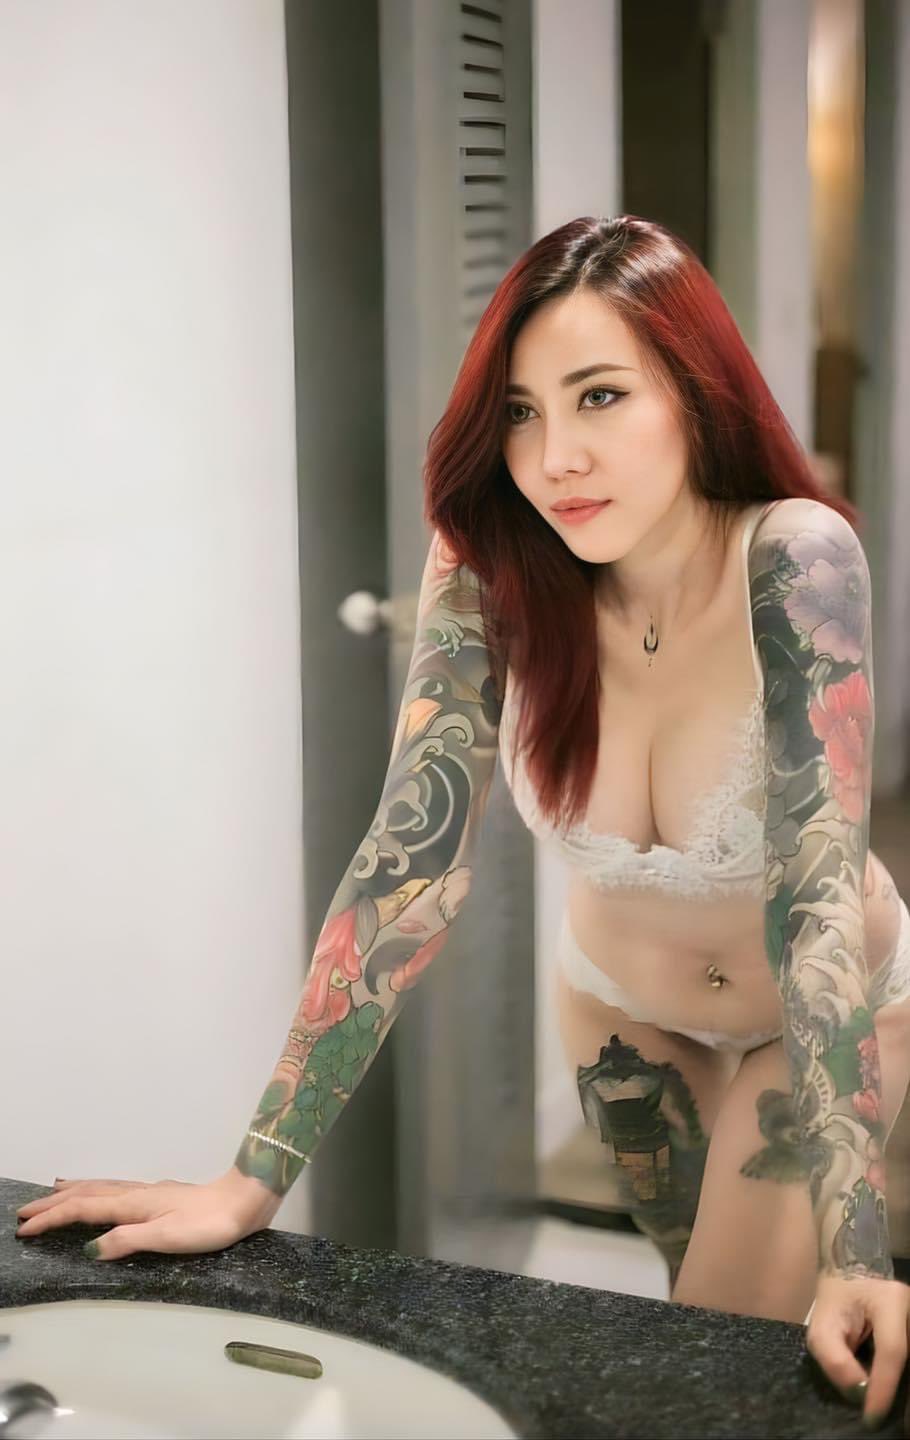 tattooed thai girl with red hair wearing white underwear